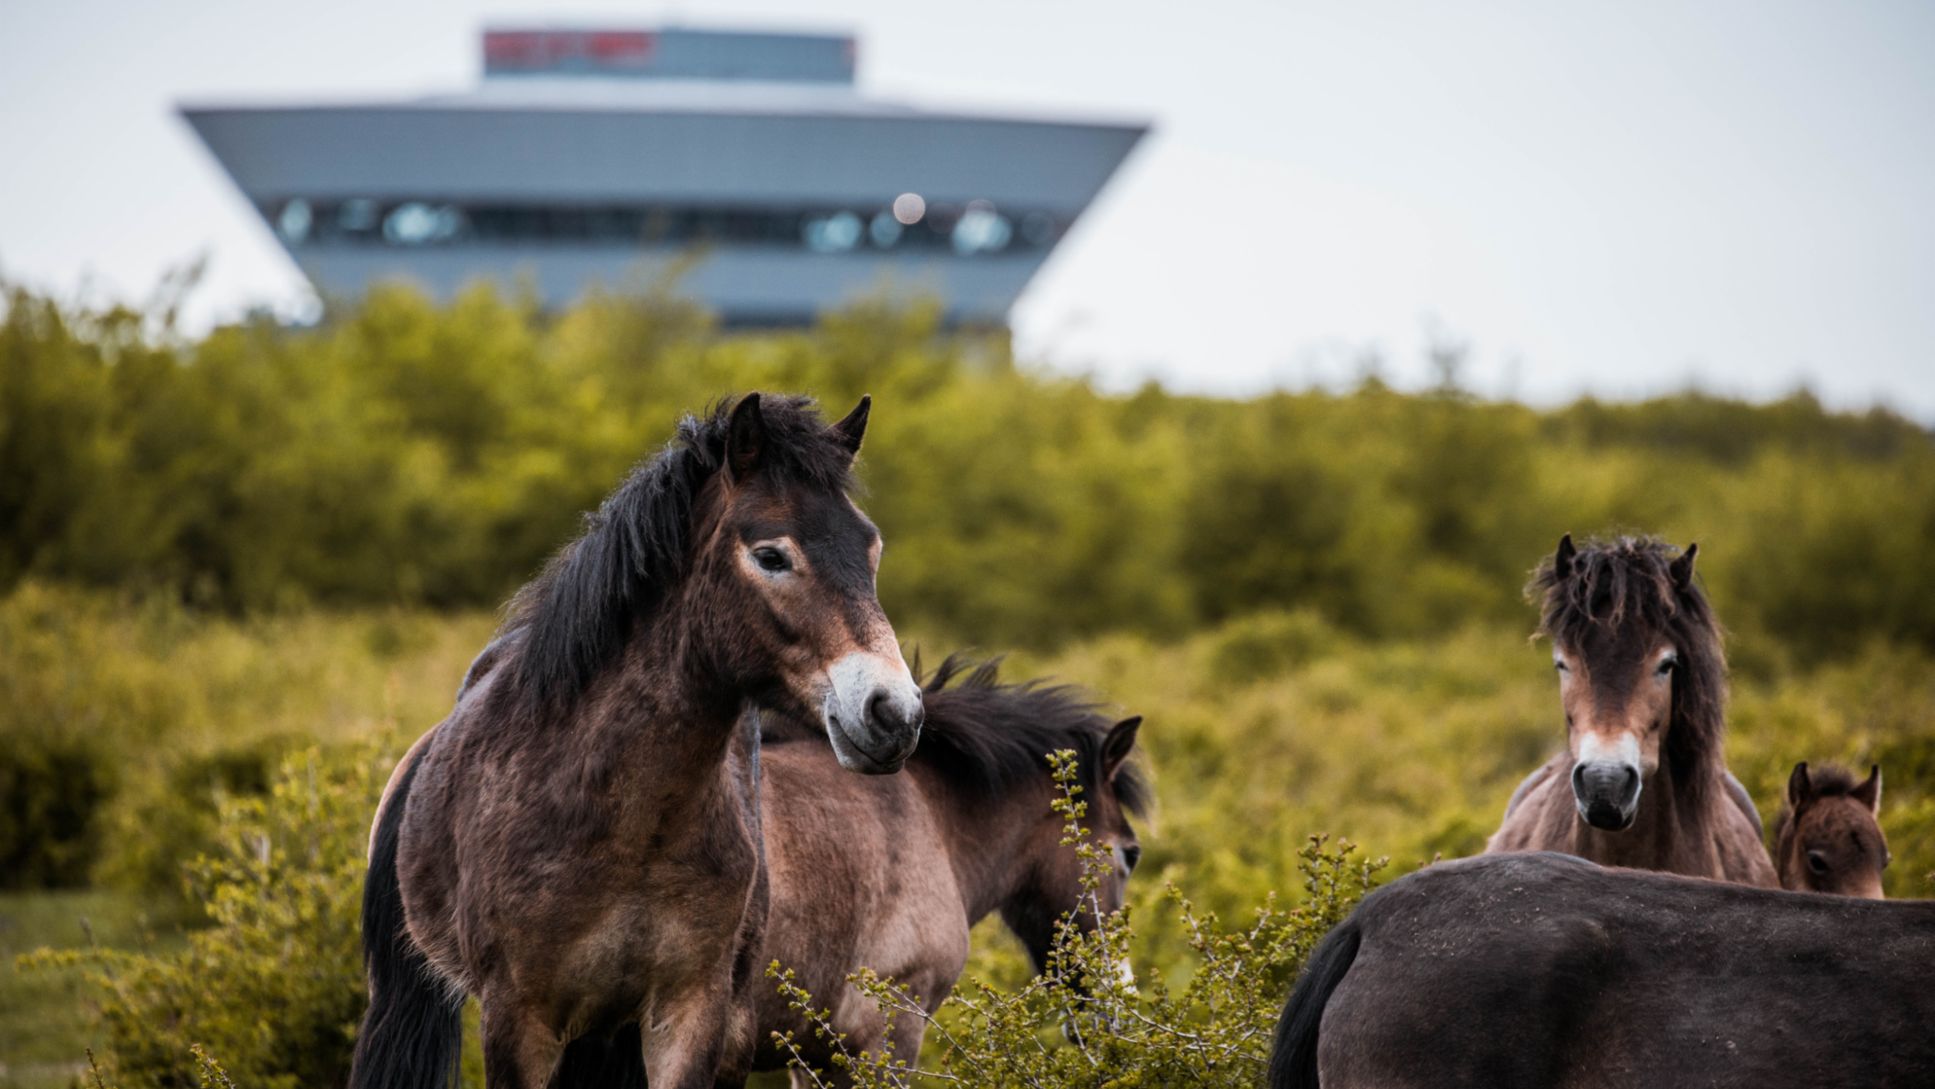 Exmoor ponies at pasture, Leipzig, 2019, Porsche Leipzig GmbH